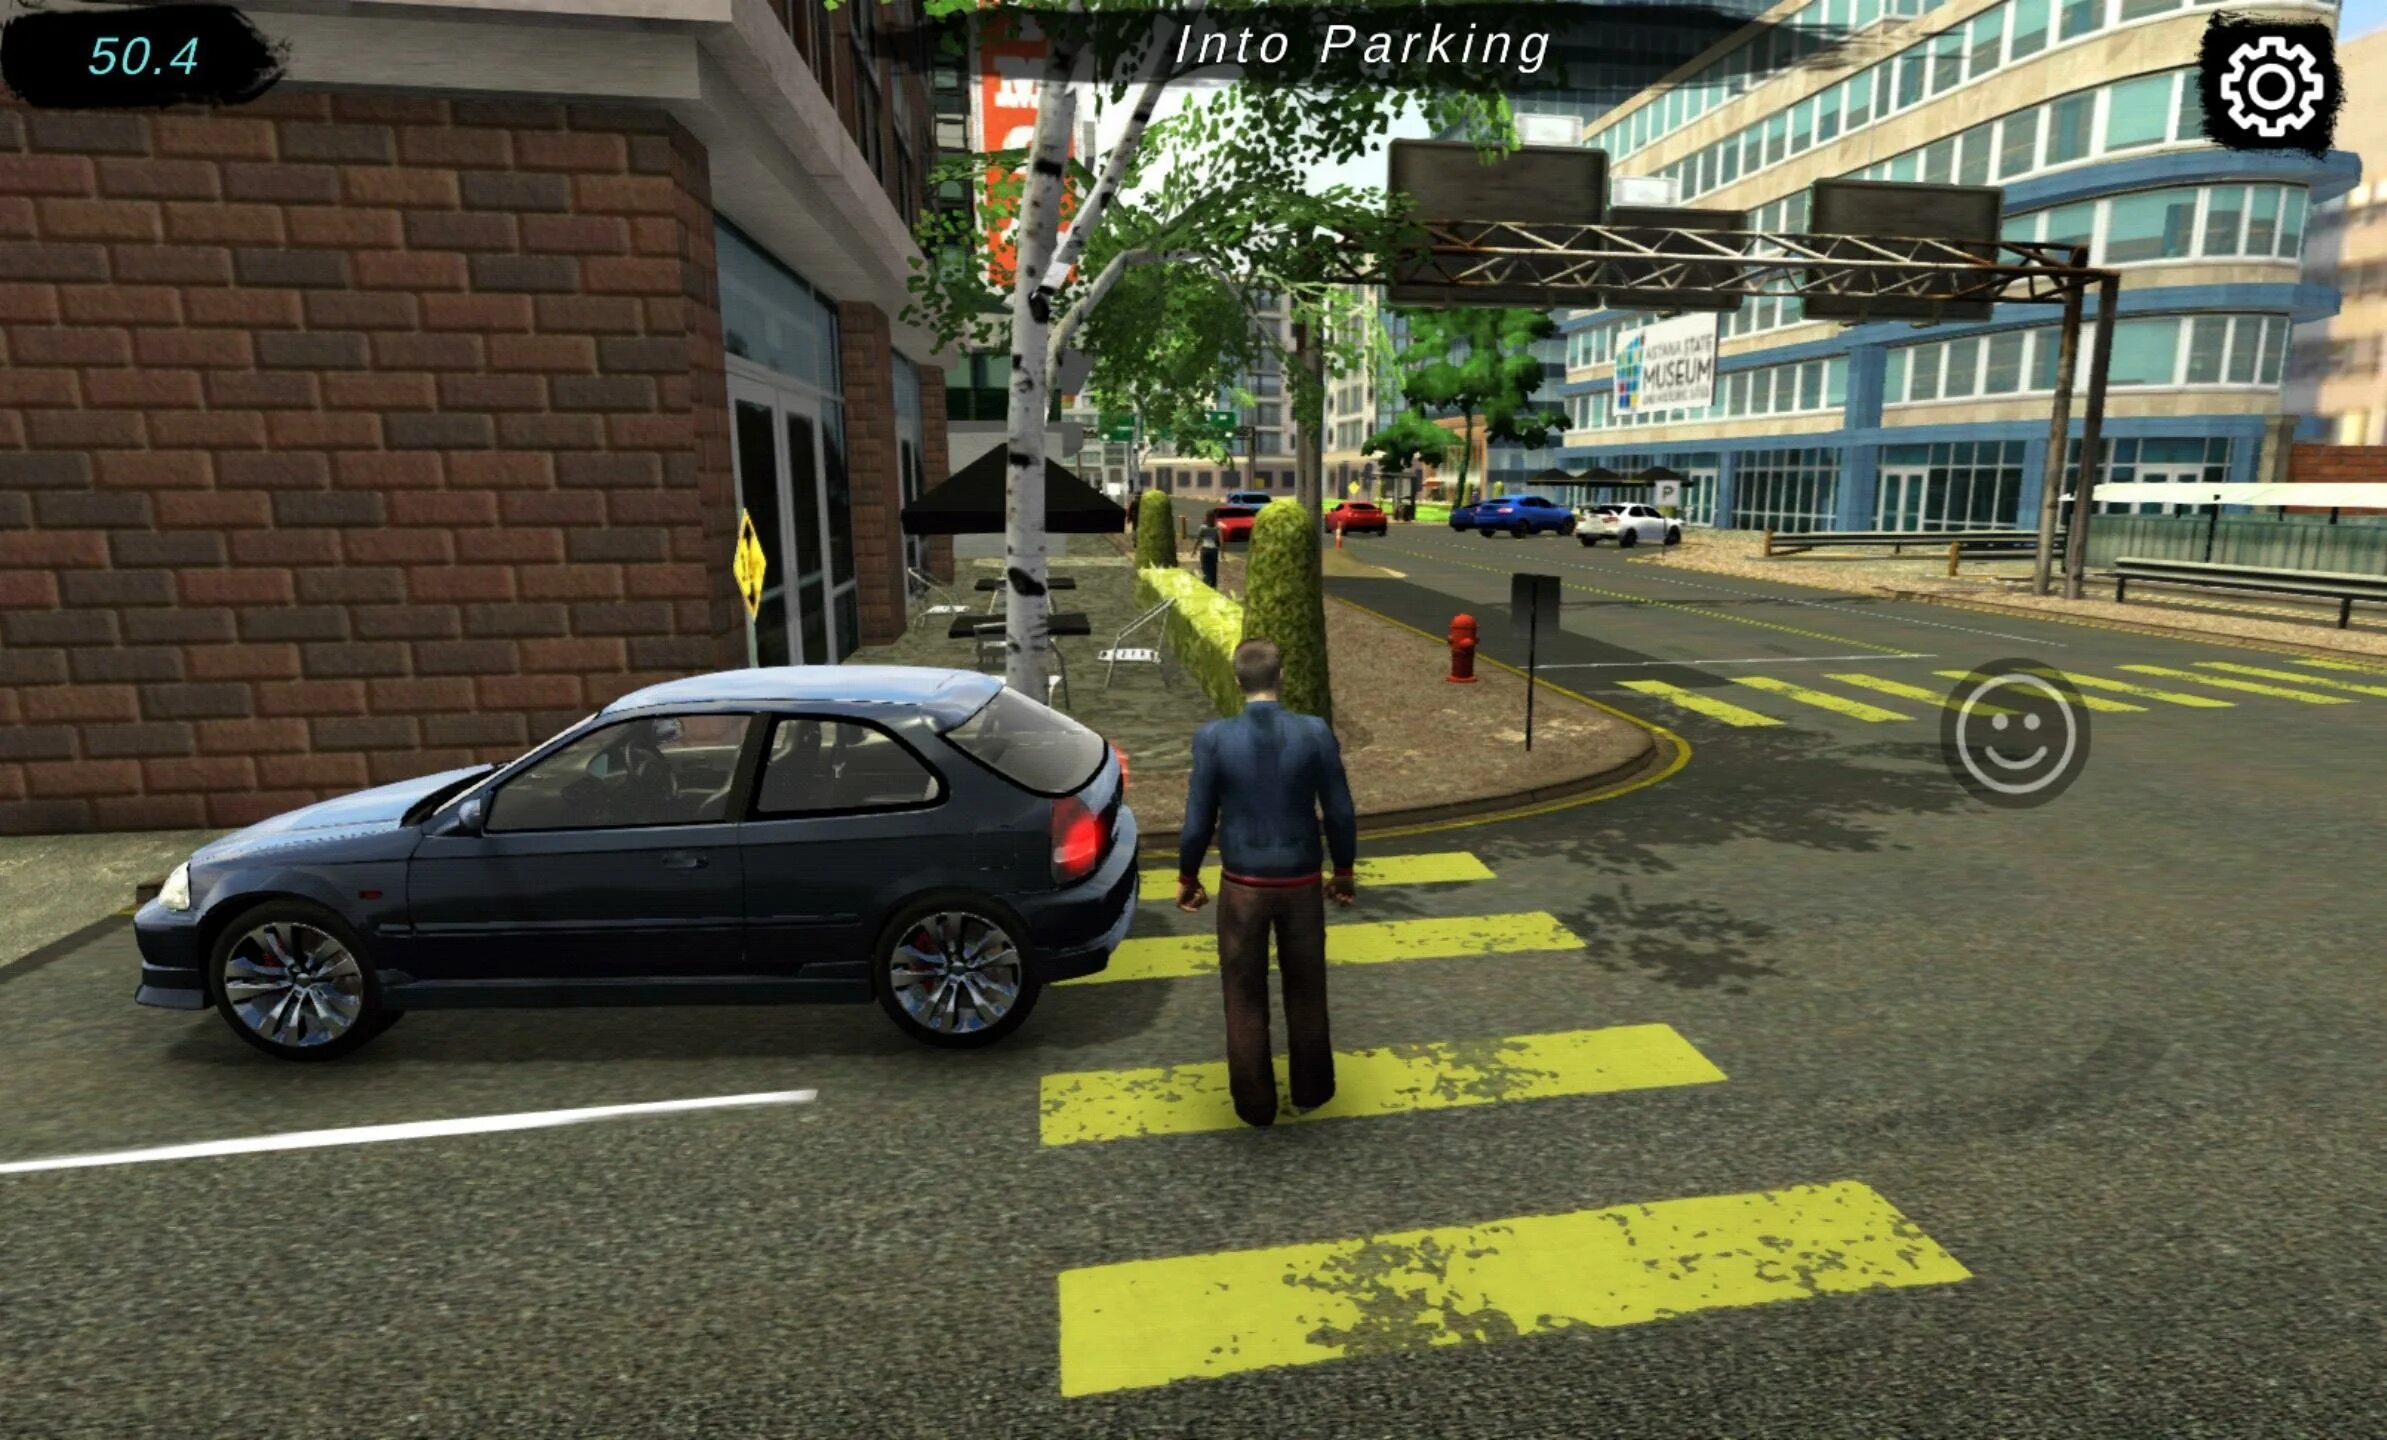 Игра car parking car parking. Car parking Multiplayer 2. Manual gearbox car parking. Car parking Multiplayer мод. Игра взломанная park машины